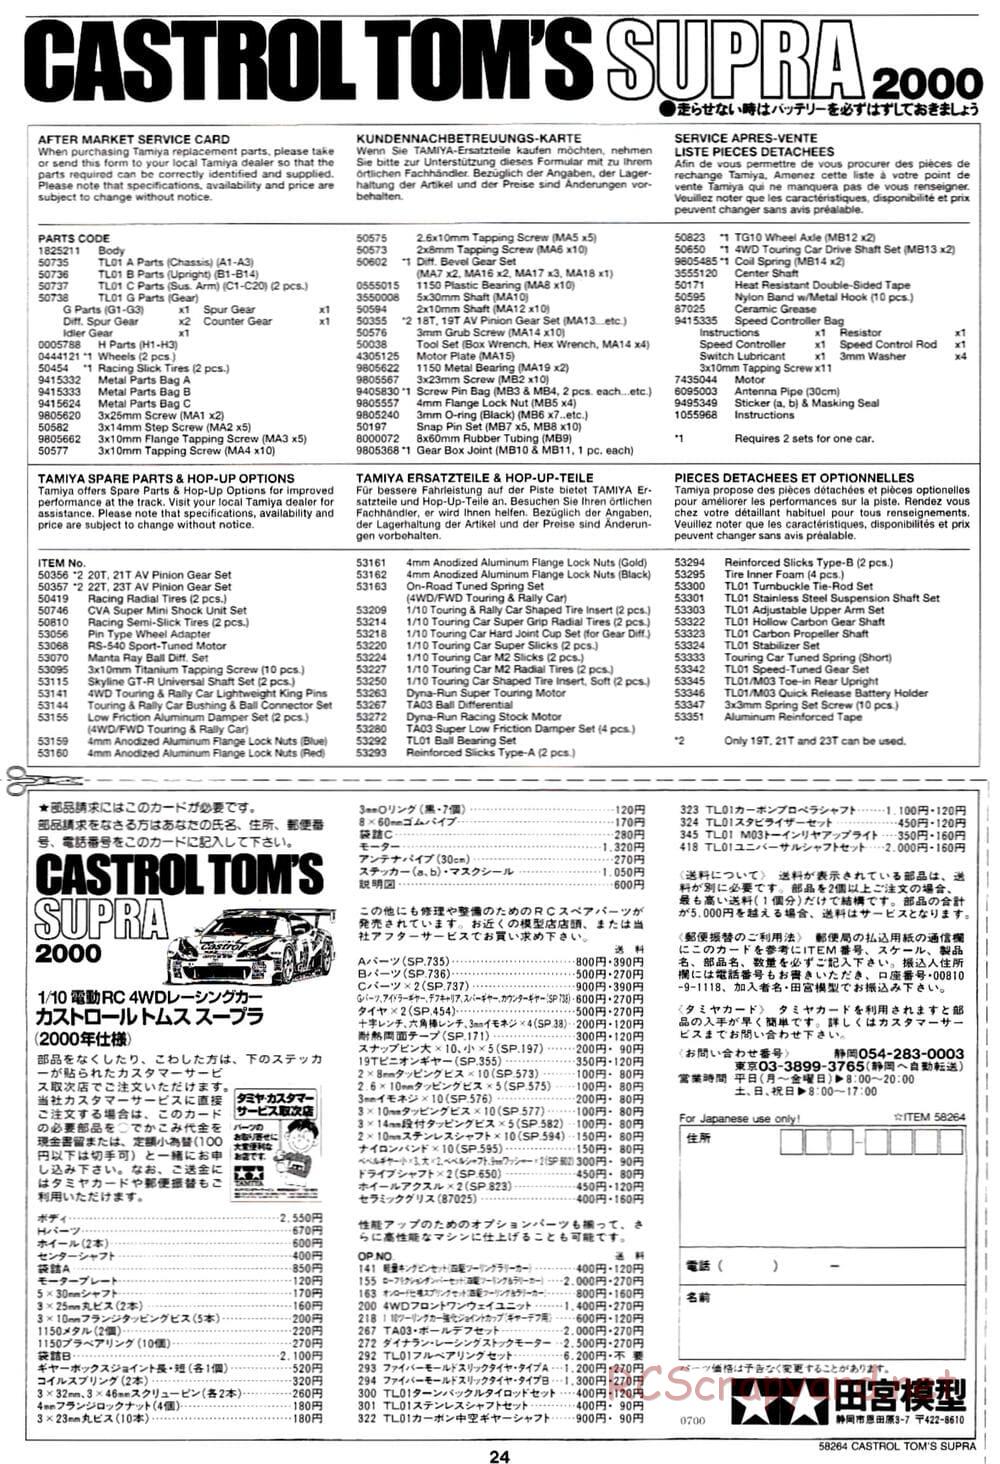 Tamiya - Castrol Tom's Supra 2000 - TL-01 Chassis - Manual - Page 24